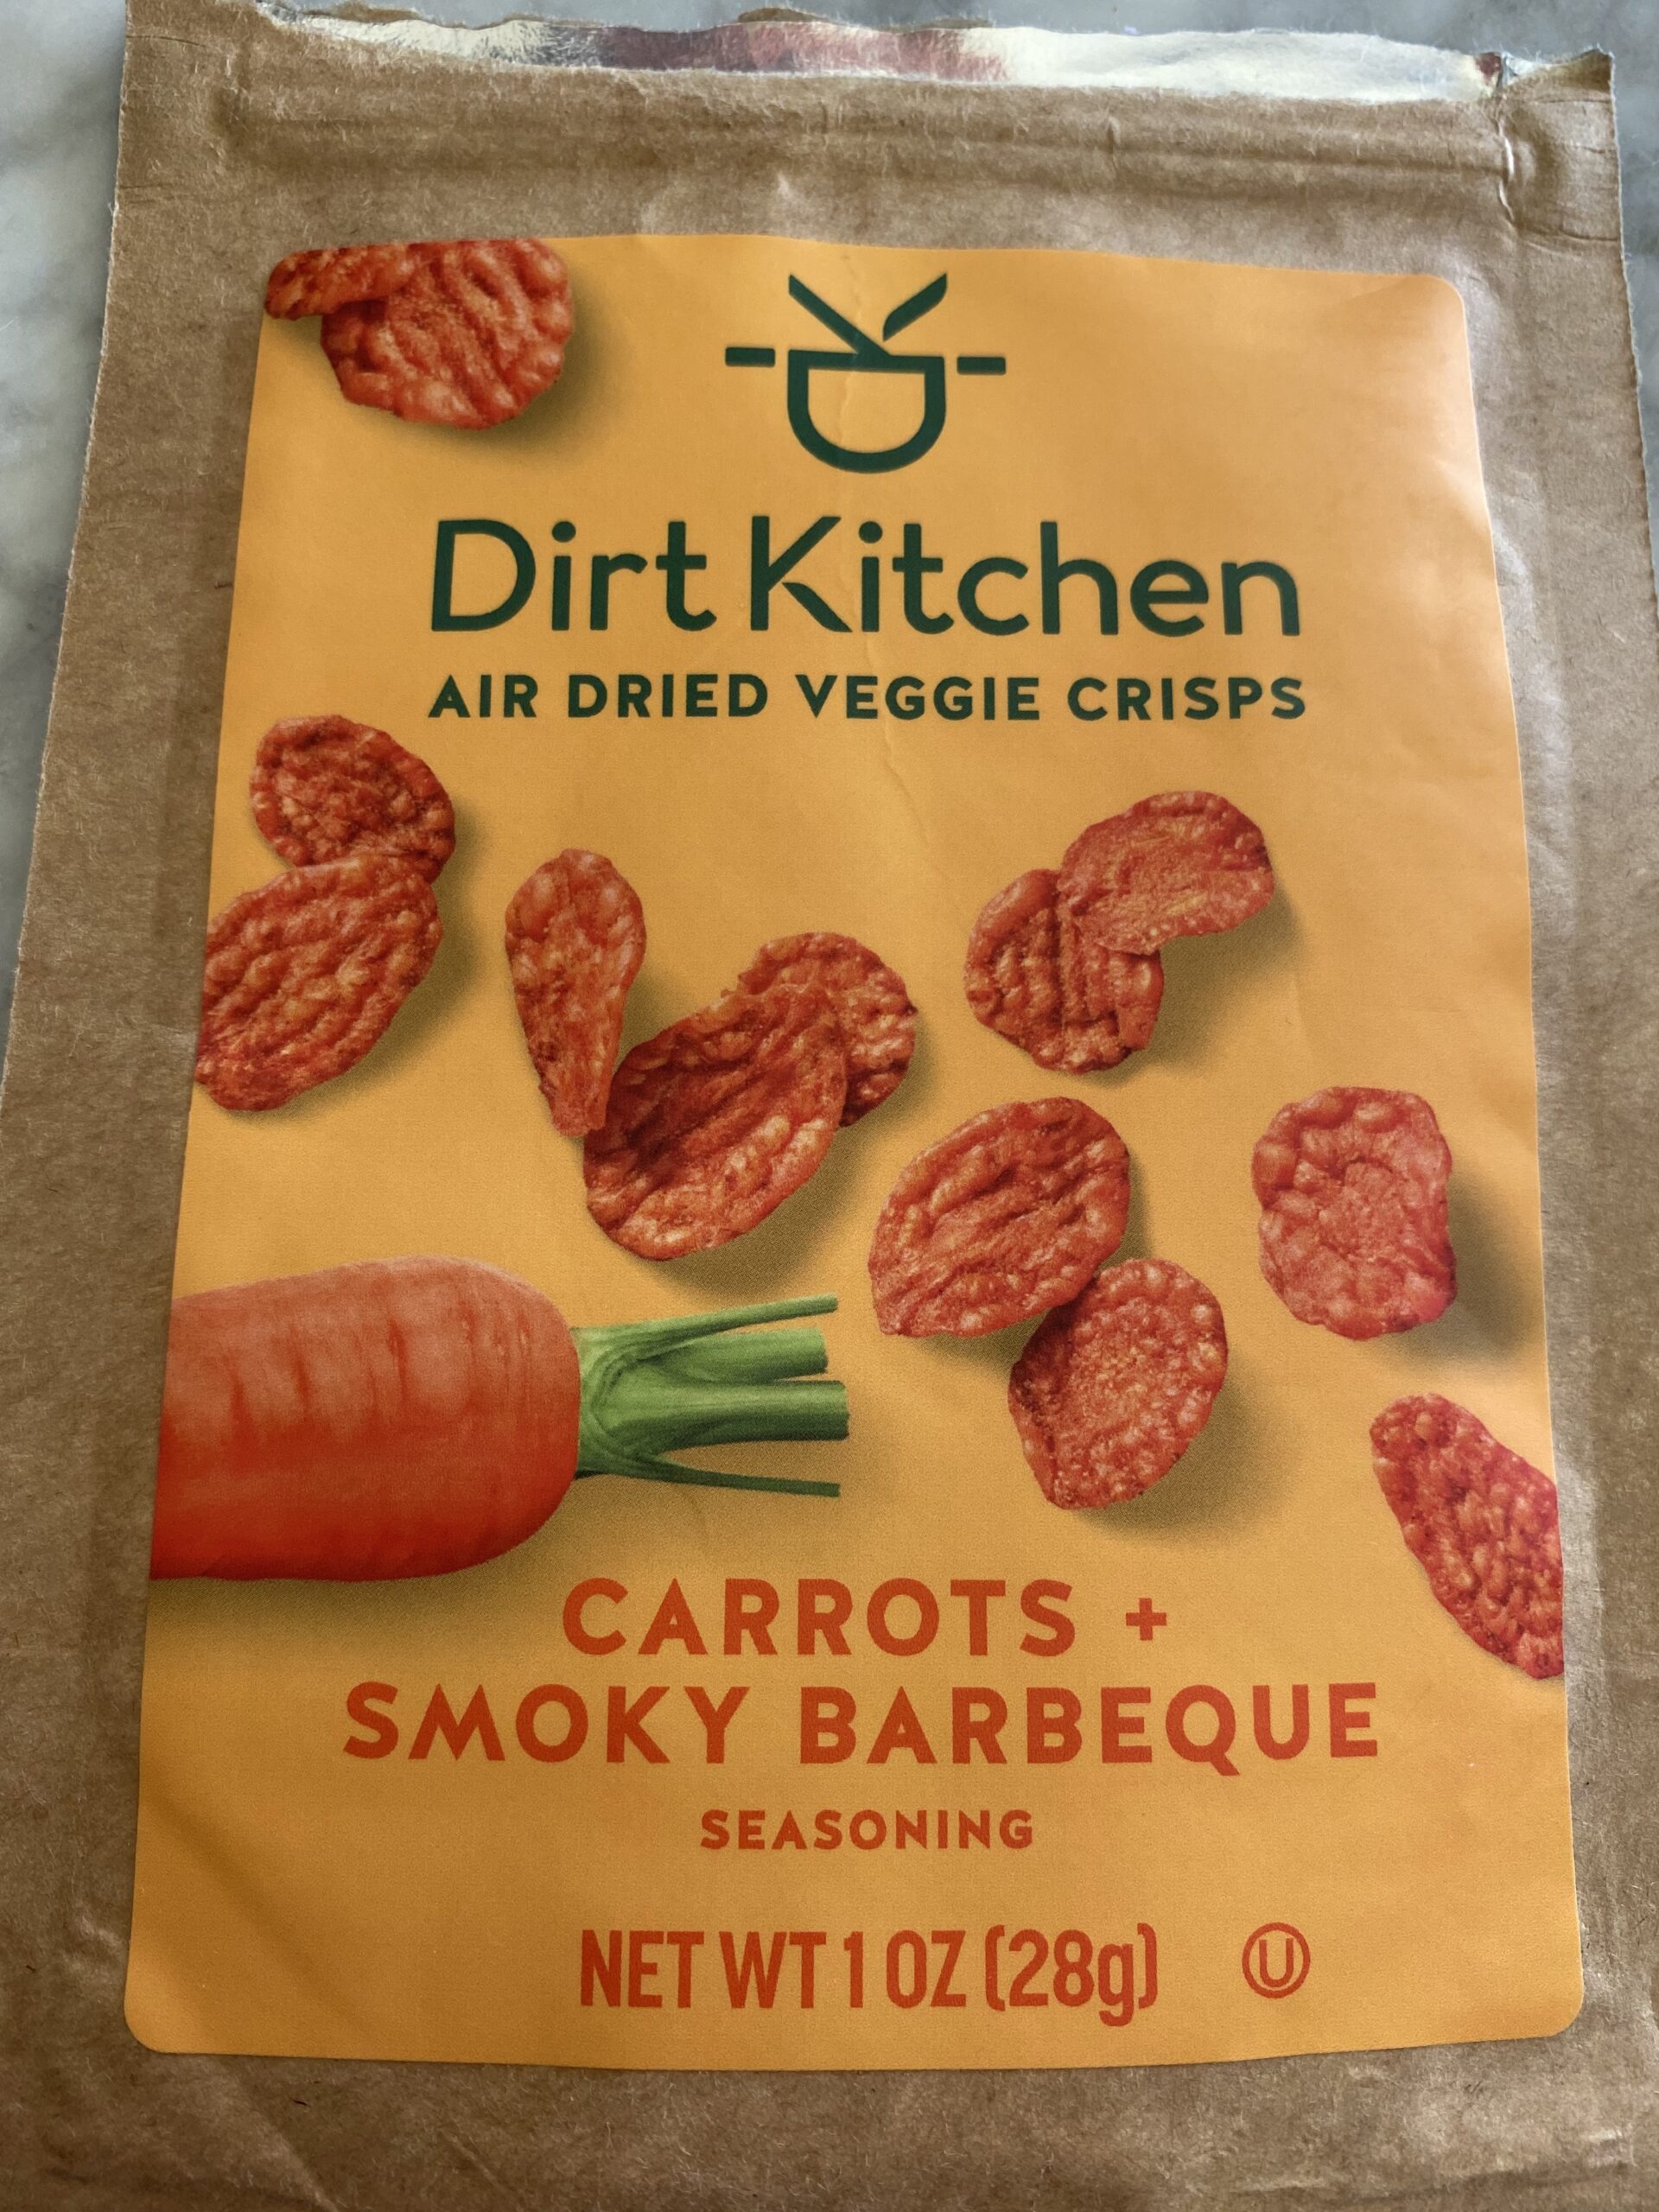 Dirt Kitchen’s air dried veggie crisps